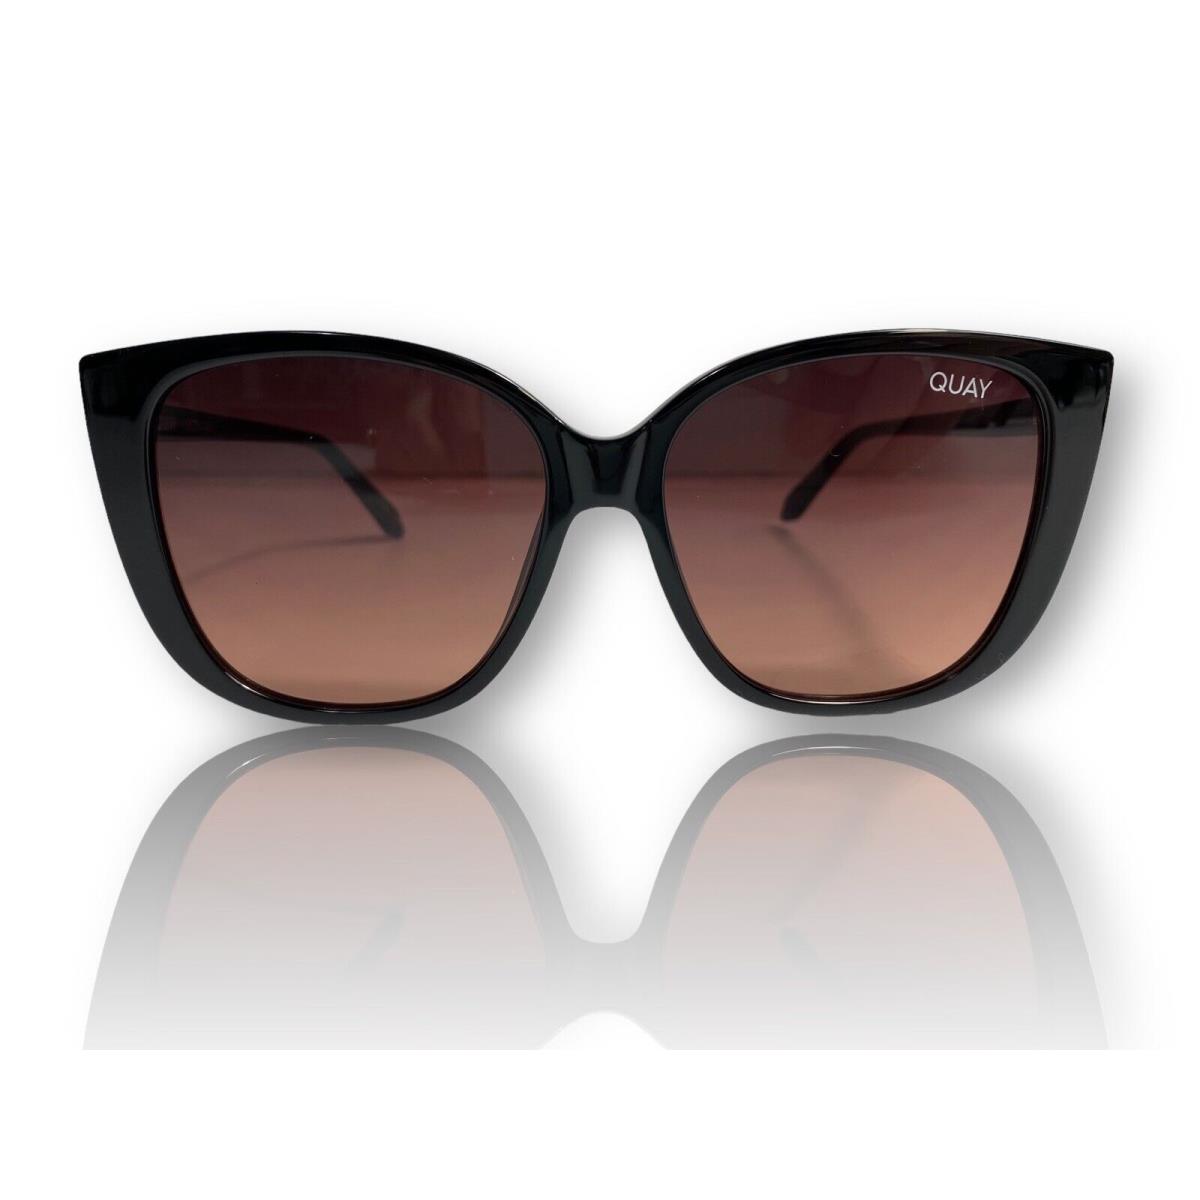 Quay Australia Ever After LG Black Chocolate Paprika Sunglasses Statement 54mm